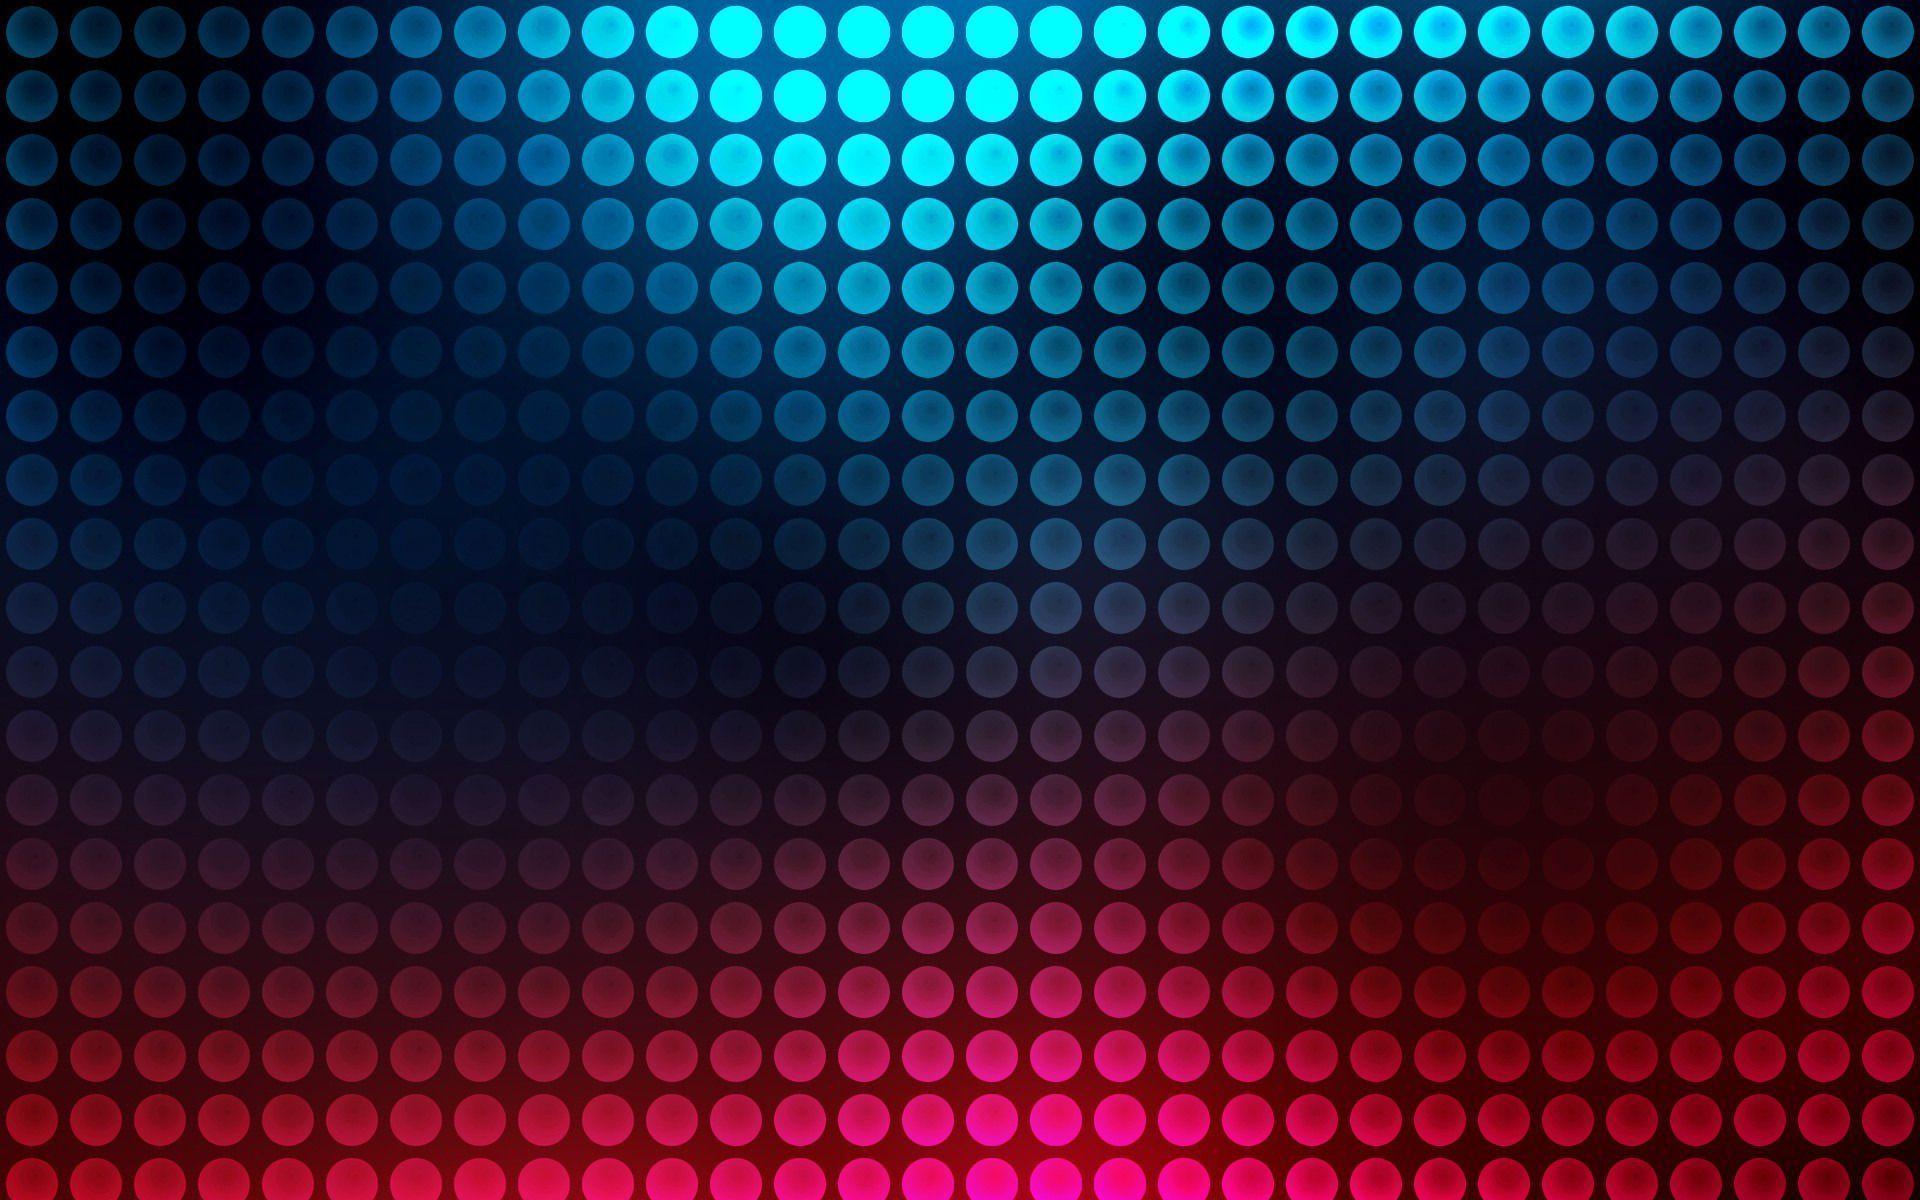 Wallpaper For > Cute Neon Polka Dot Background